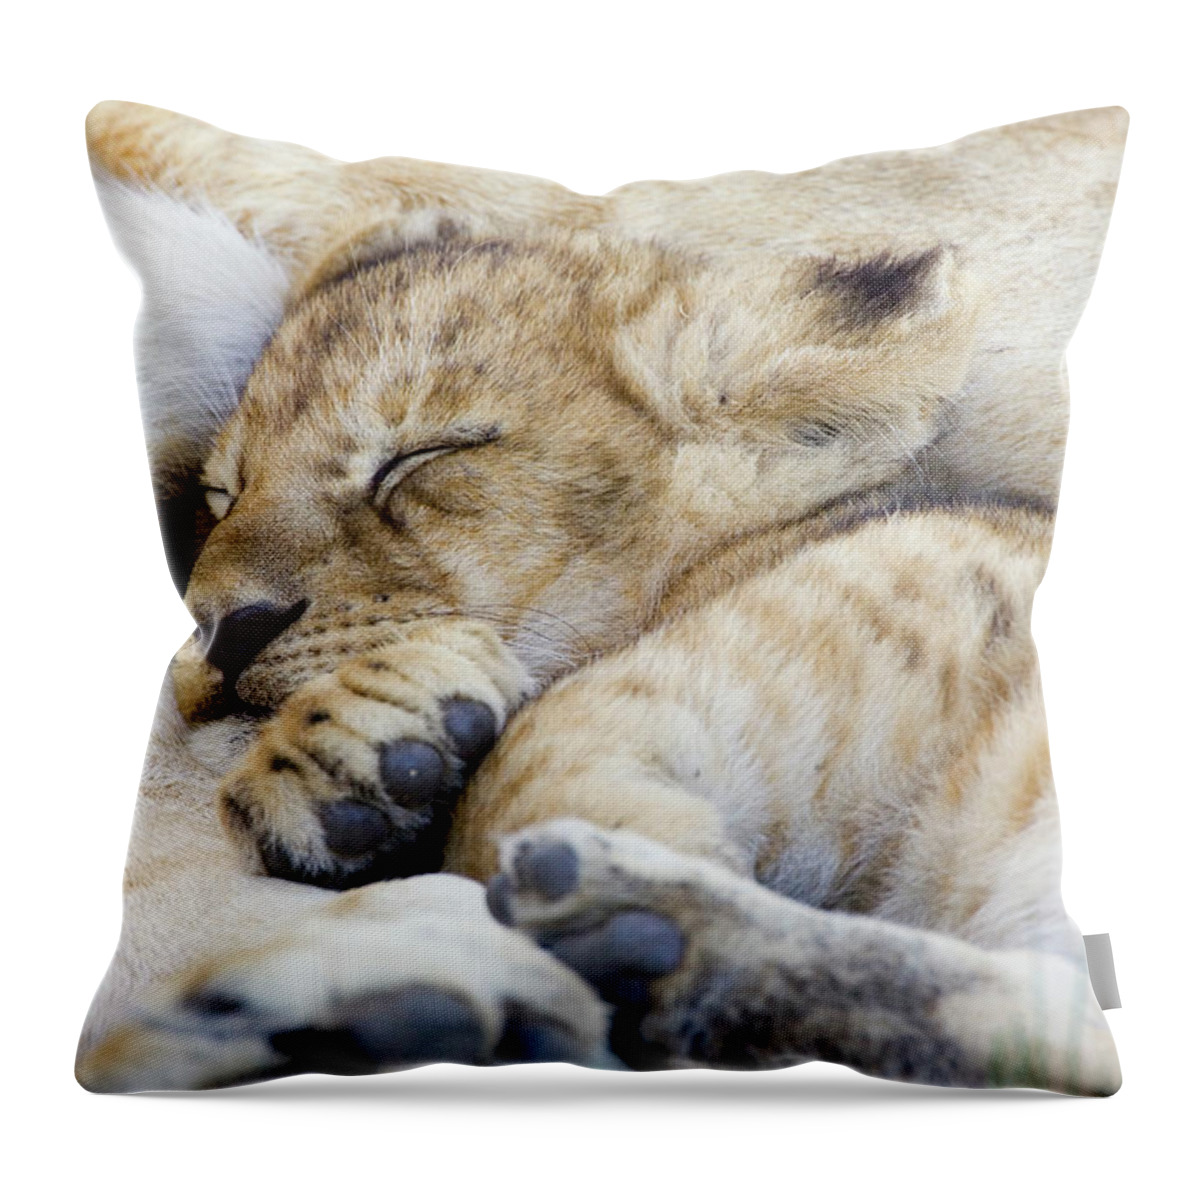 00761283 Throw Pillow featuring the photograph African Lion Cub Sleeping by Suzi Eszterhas